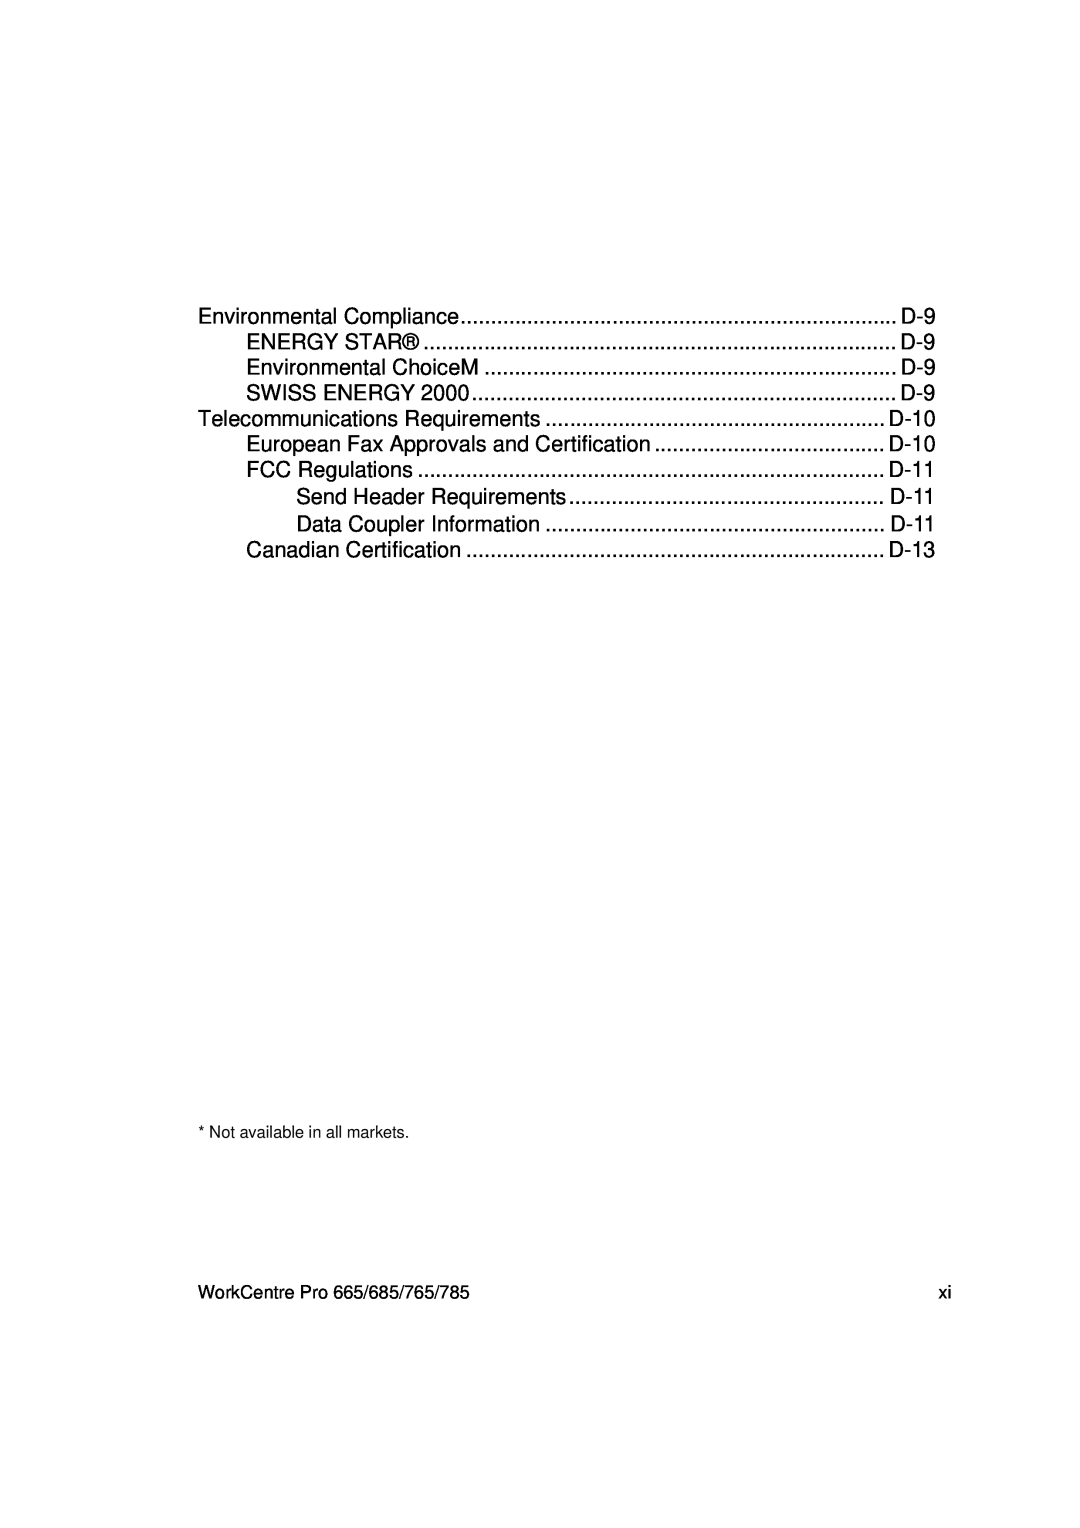 Xerox 665, 765, 685, 785 manual Environmental Compliance 